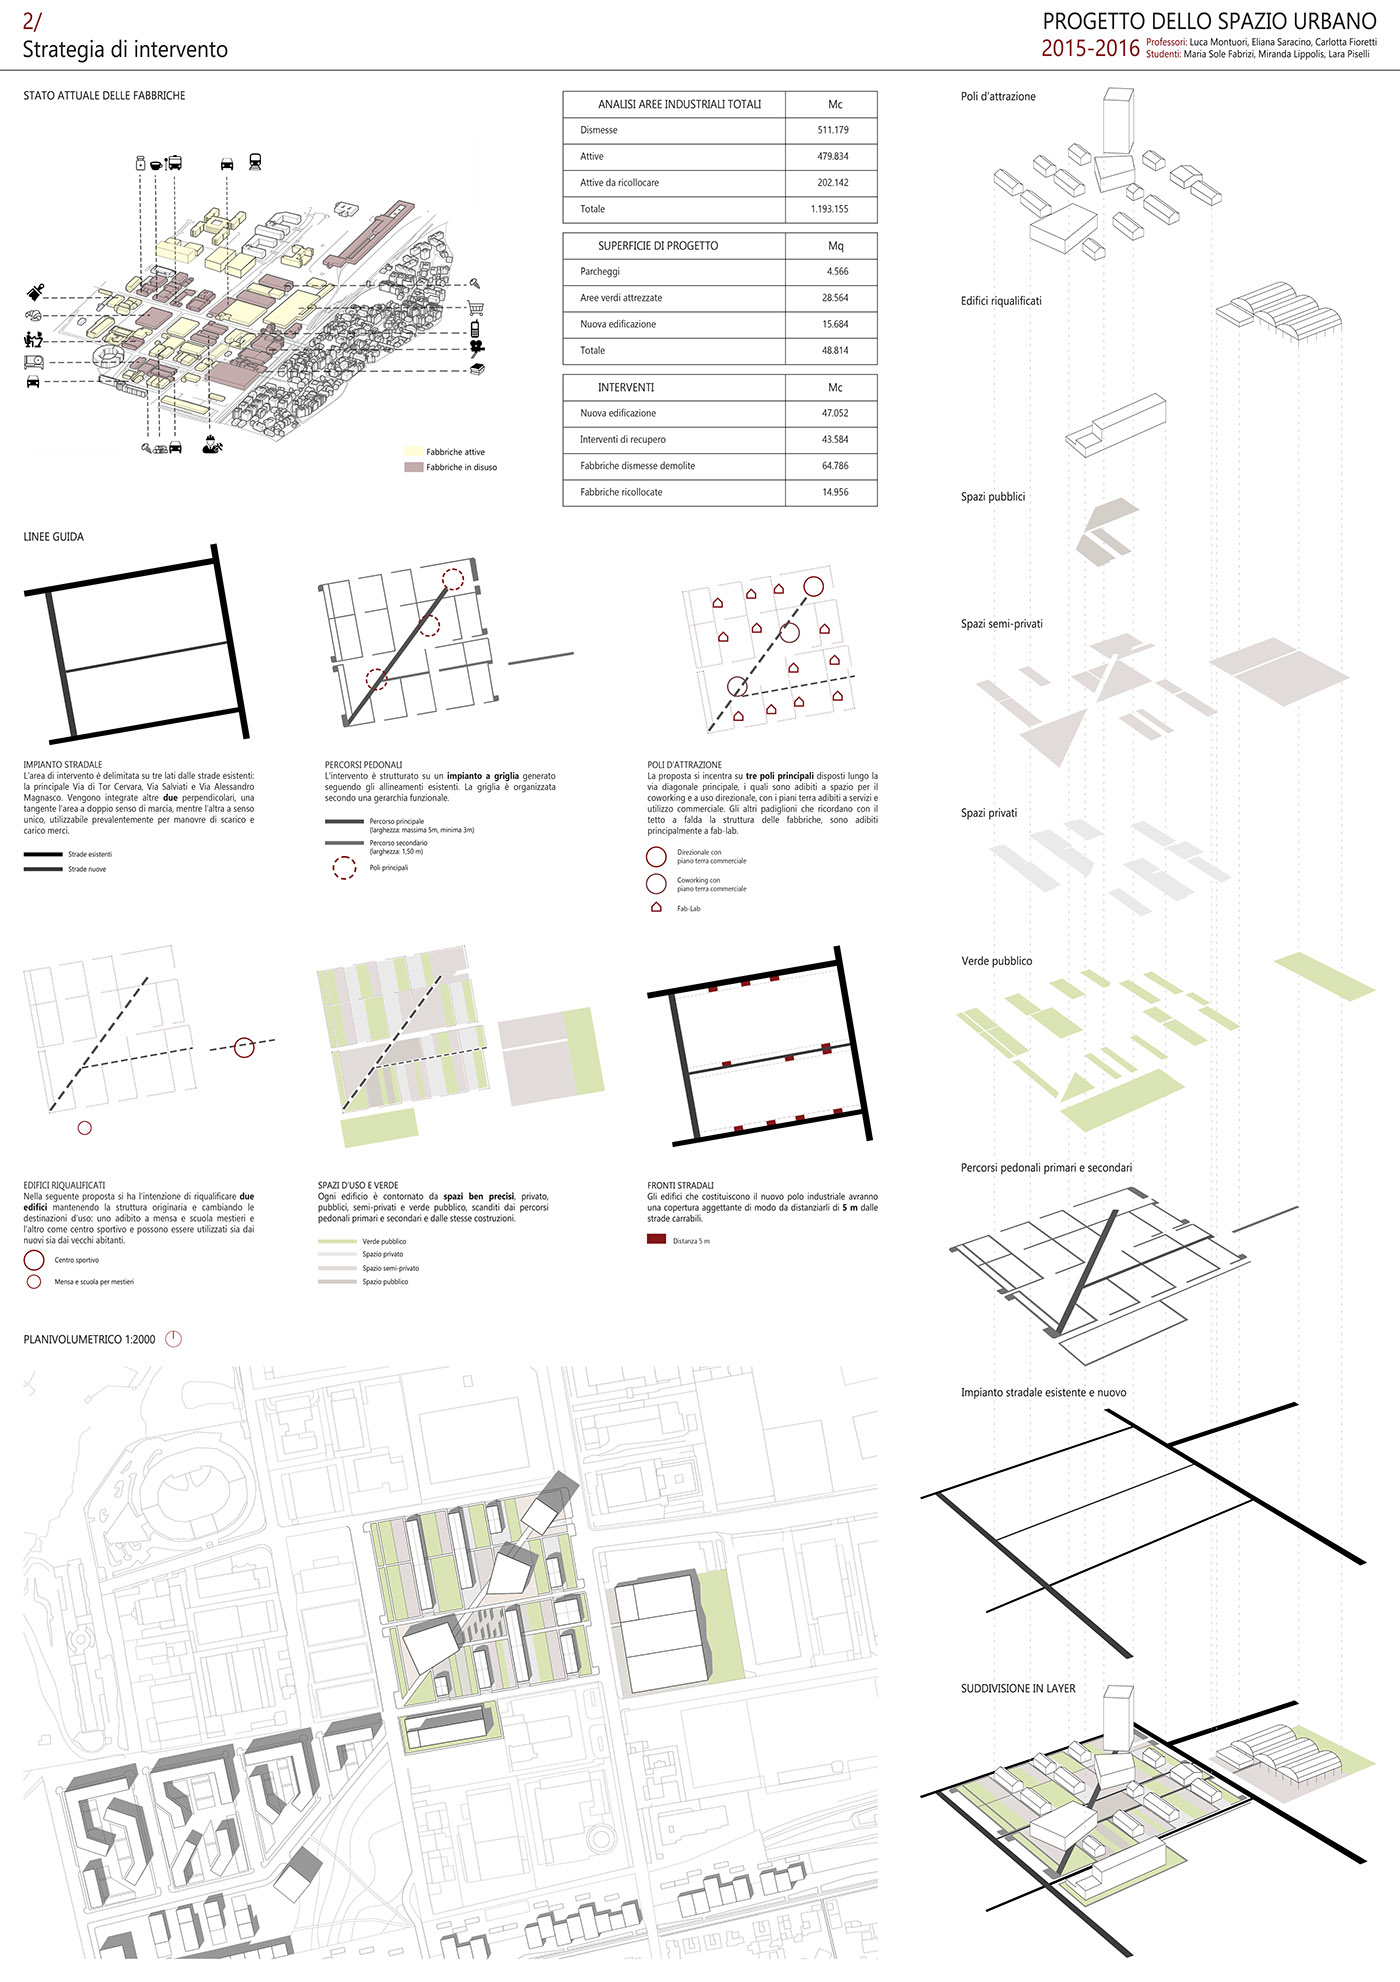 public space Tor Sapienza riqualification Urban Architecture fab lab Urban Project